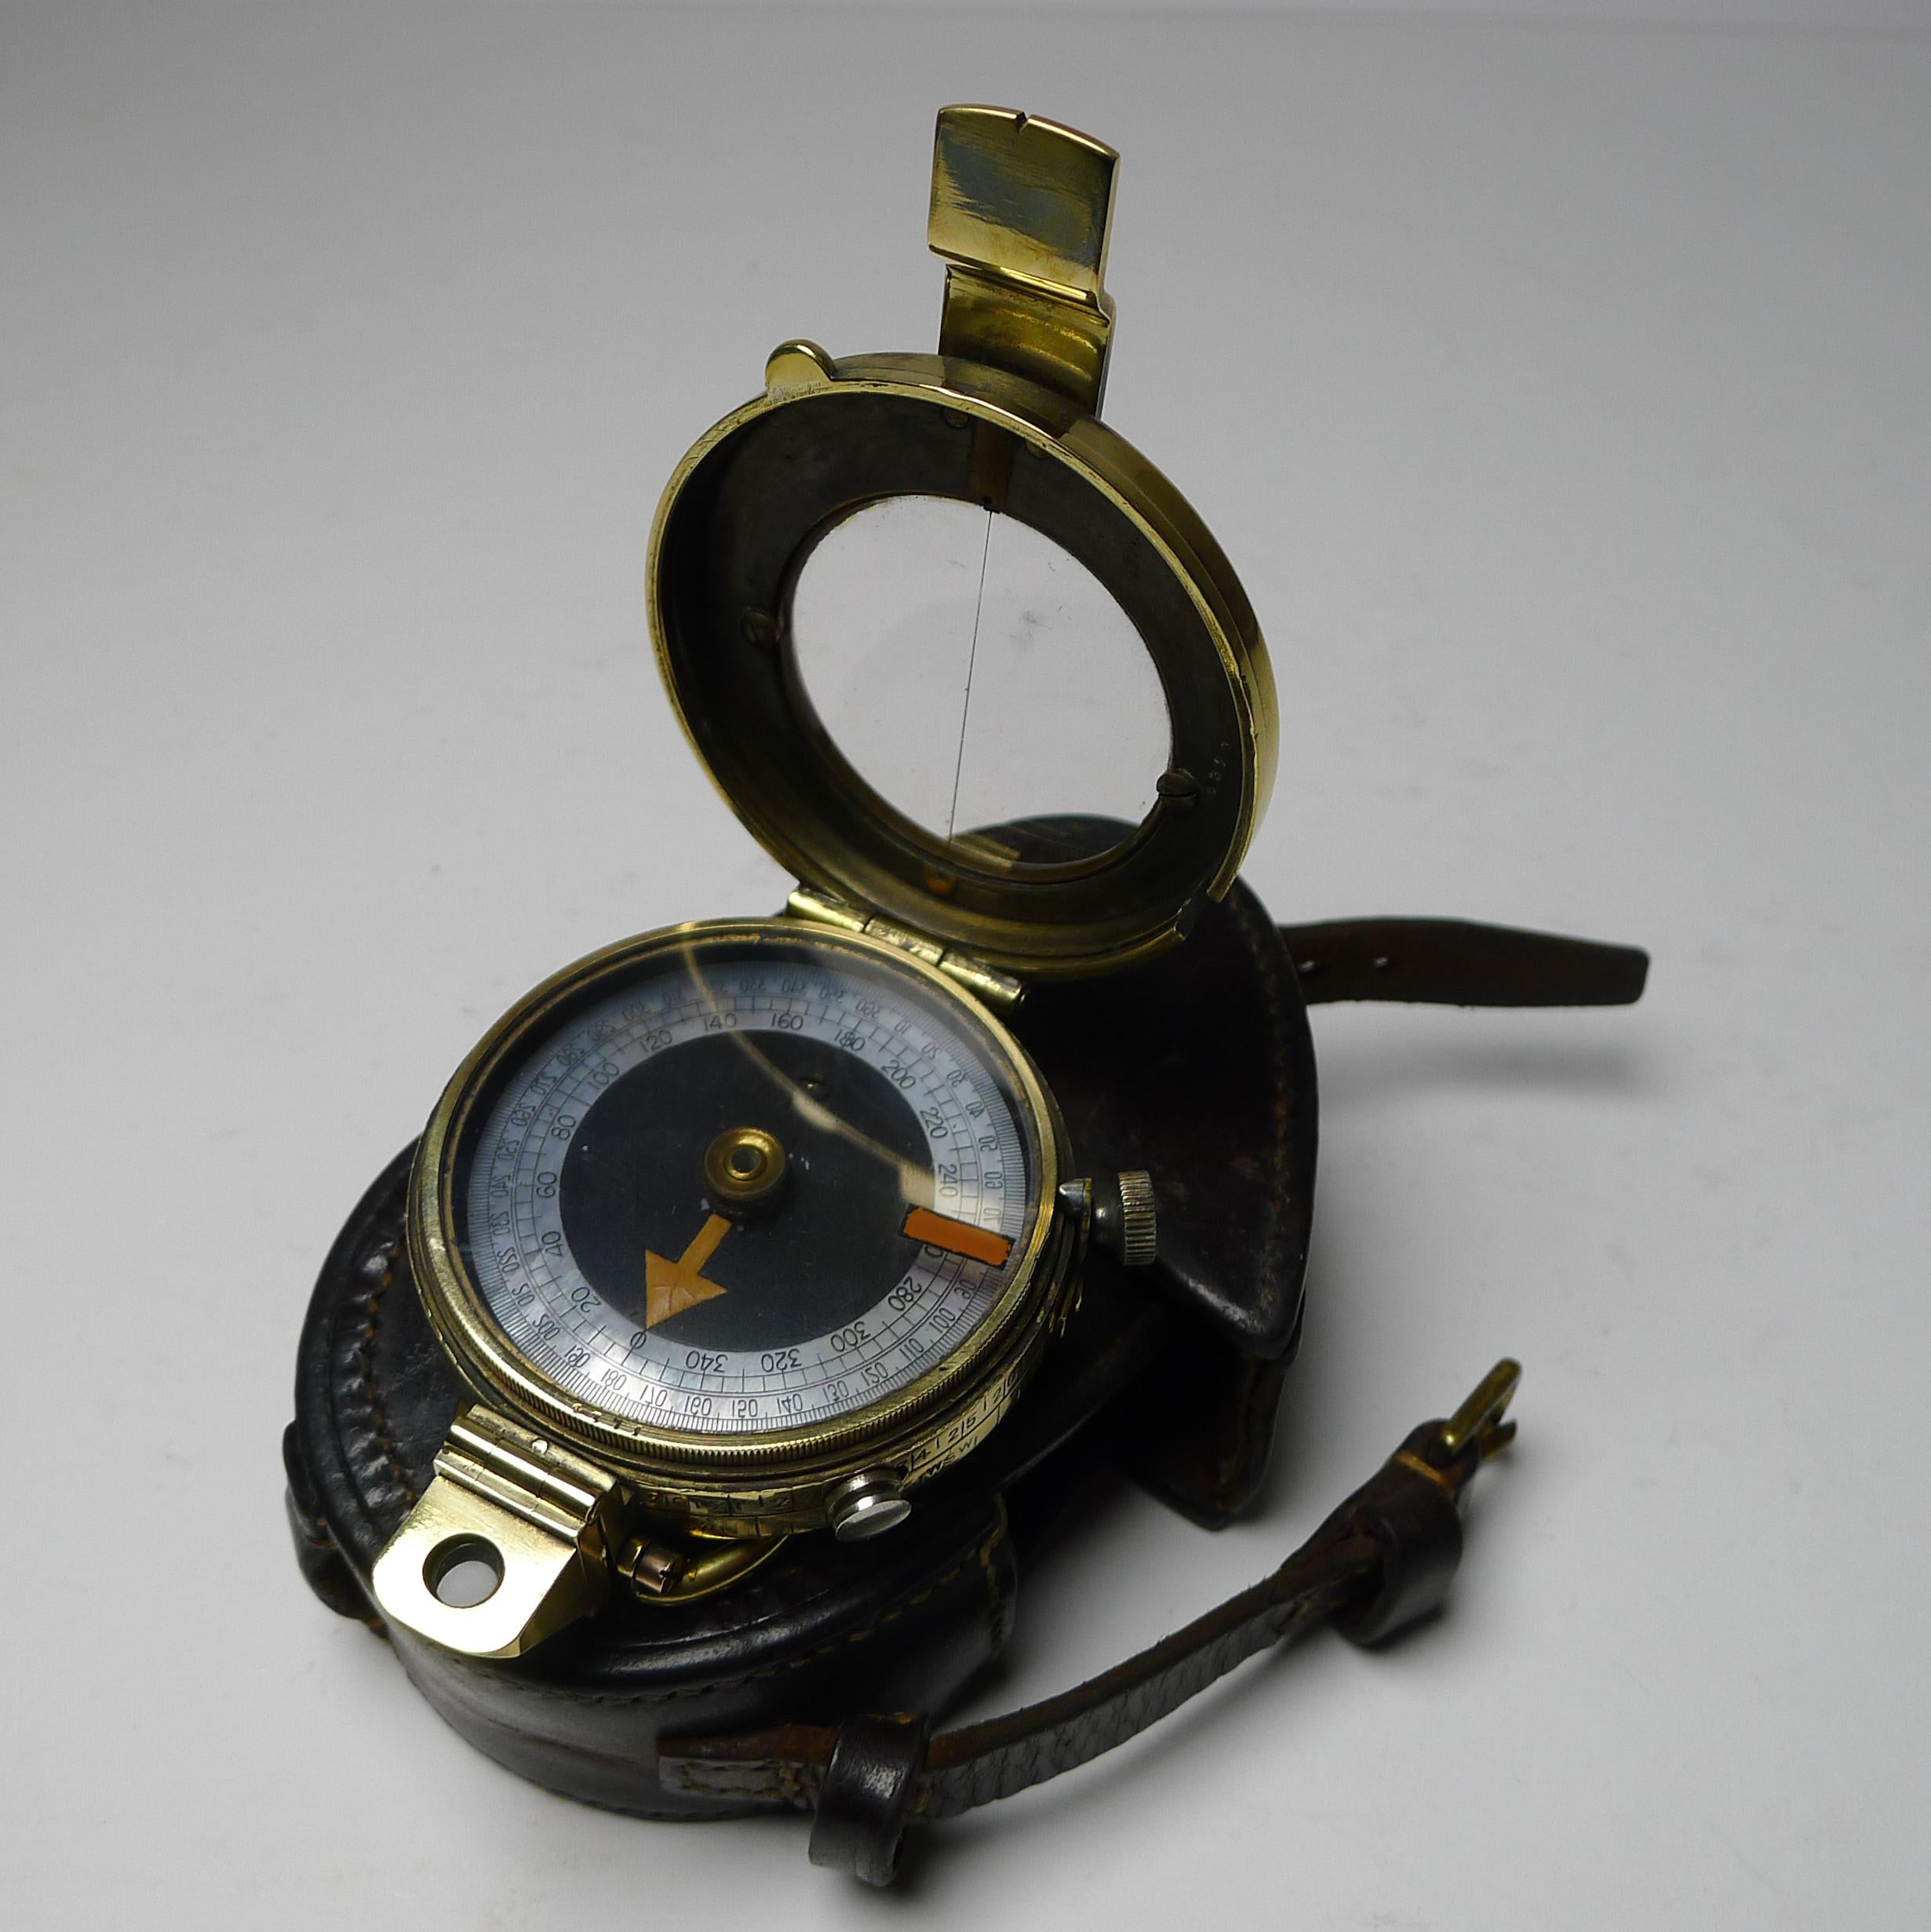 WW1 1915 British Army Officer's Compass - Verner's Patent MK VII by E. Koehn 3